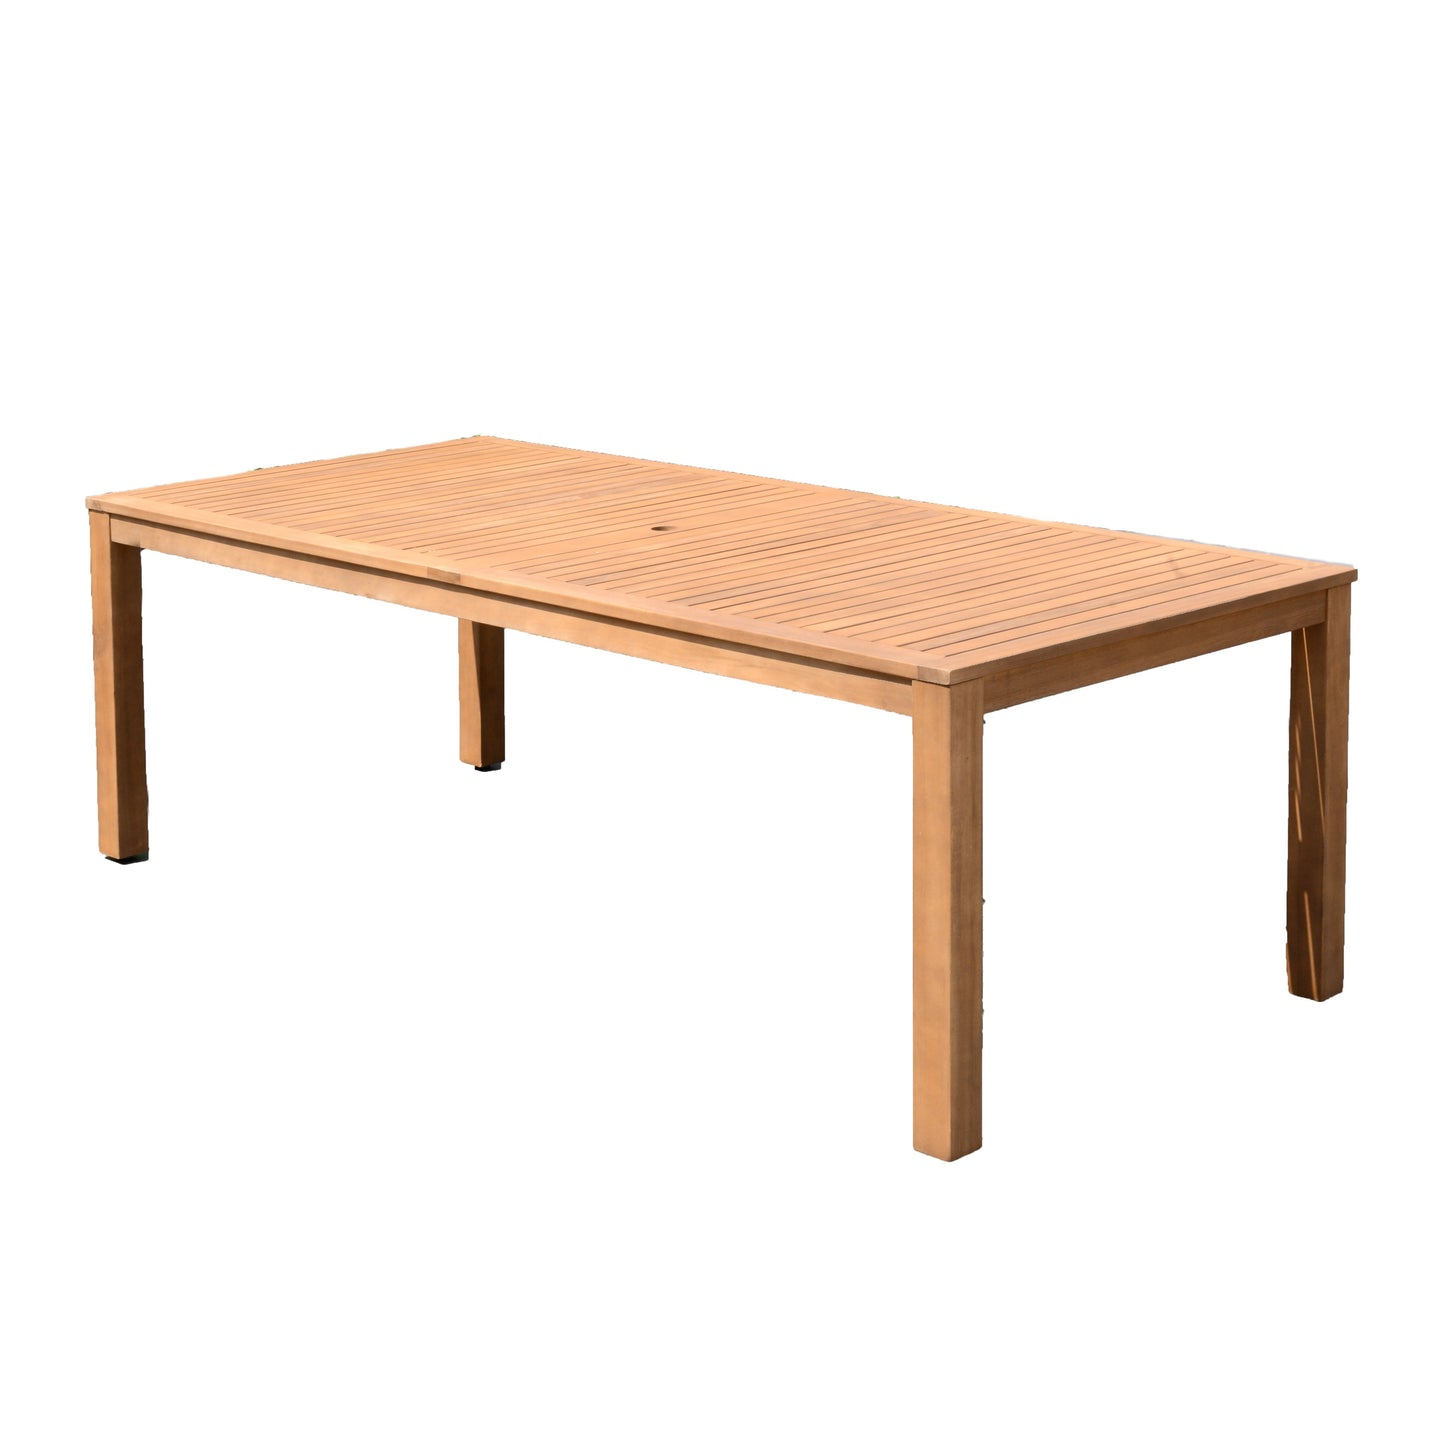 Alama Rectangular Teak Finish 100% FSC Certified Solid Wood Table